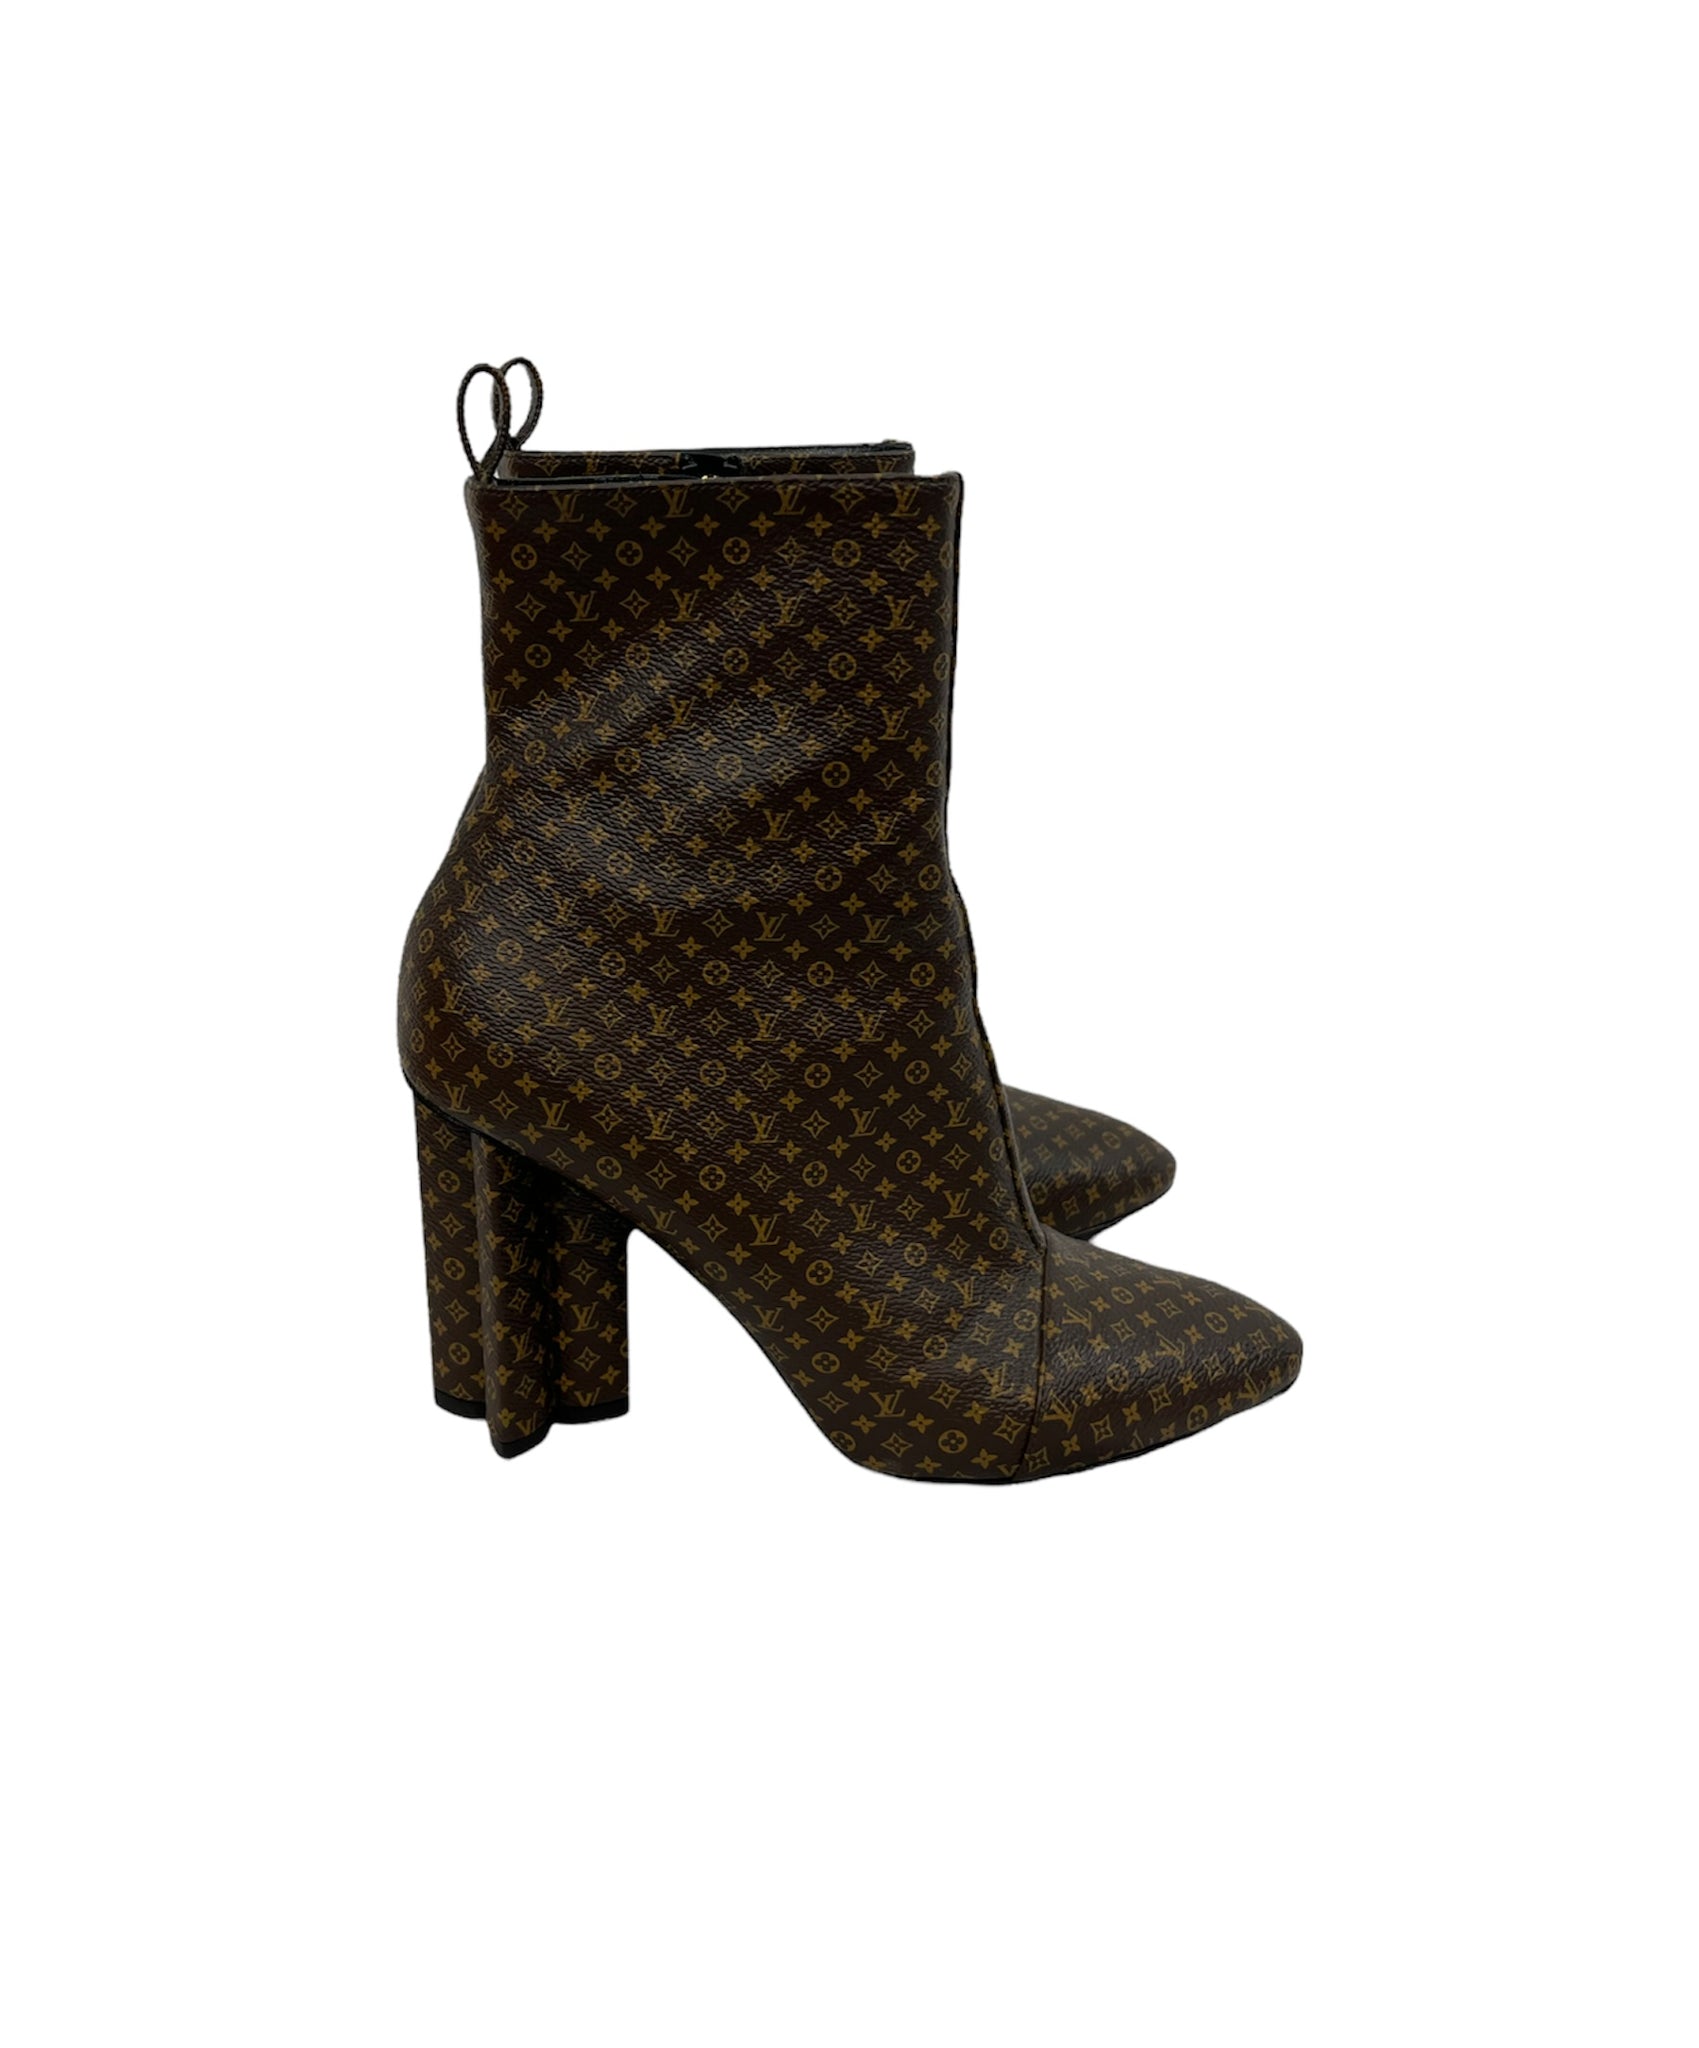 Louis Vuitton Monogram Silhouette Ankle Boot